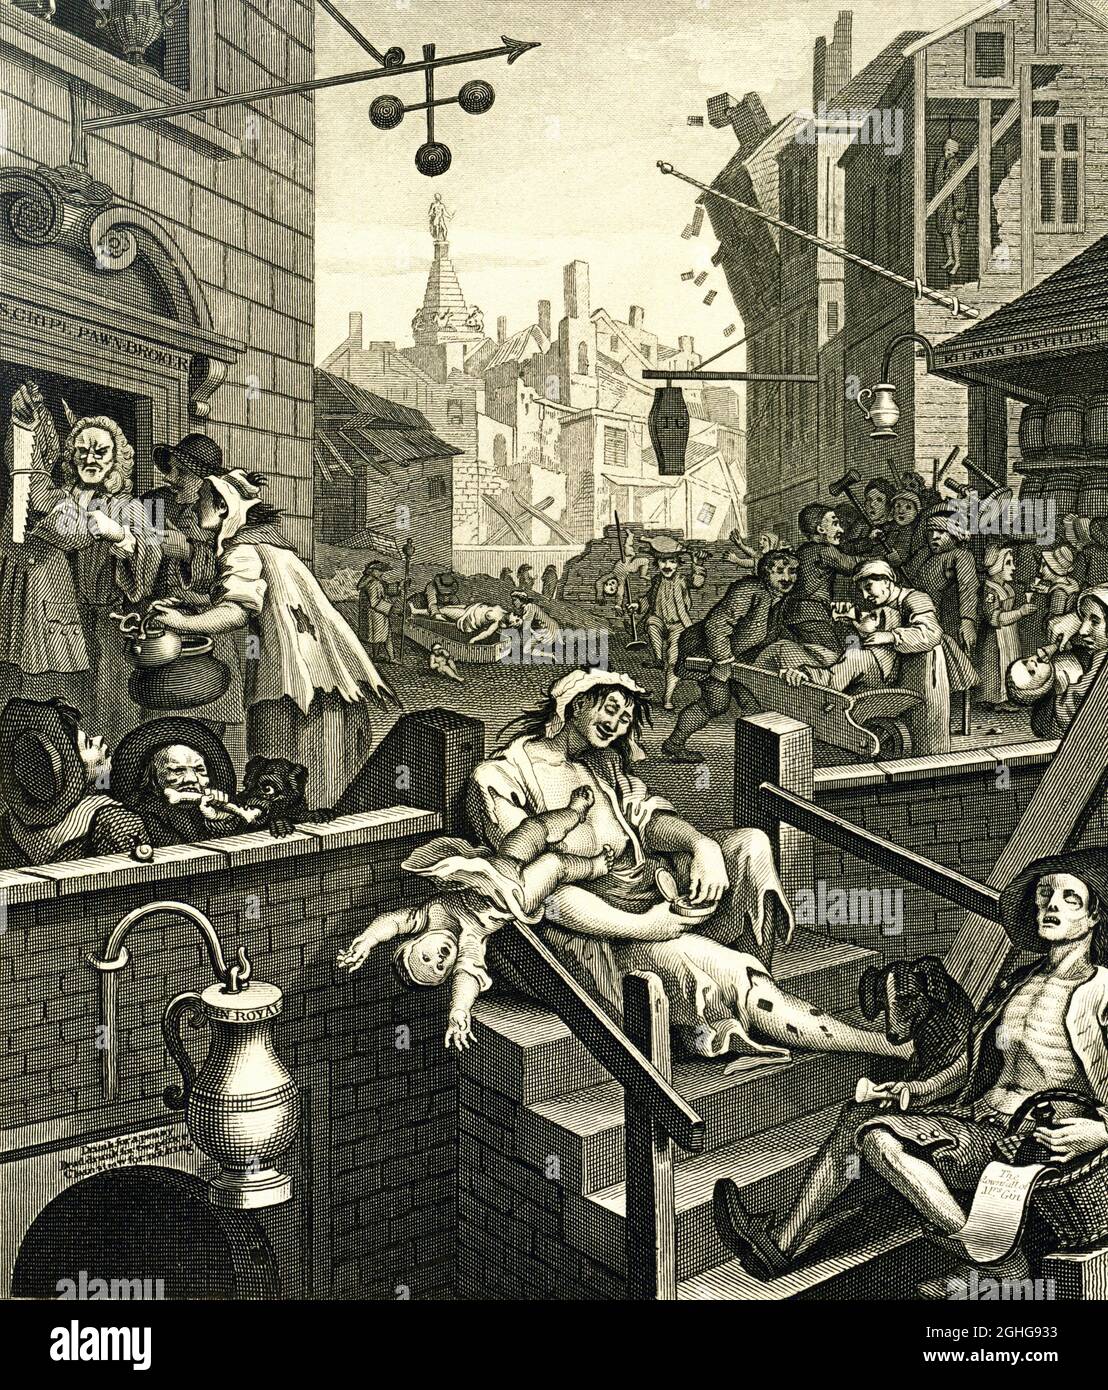 William Hogarth artwork - Gin Lane - 1751 Stock Photo